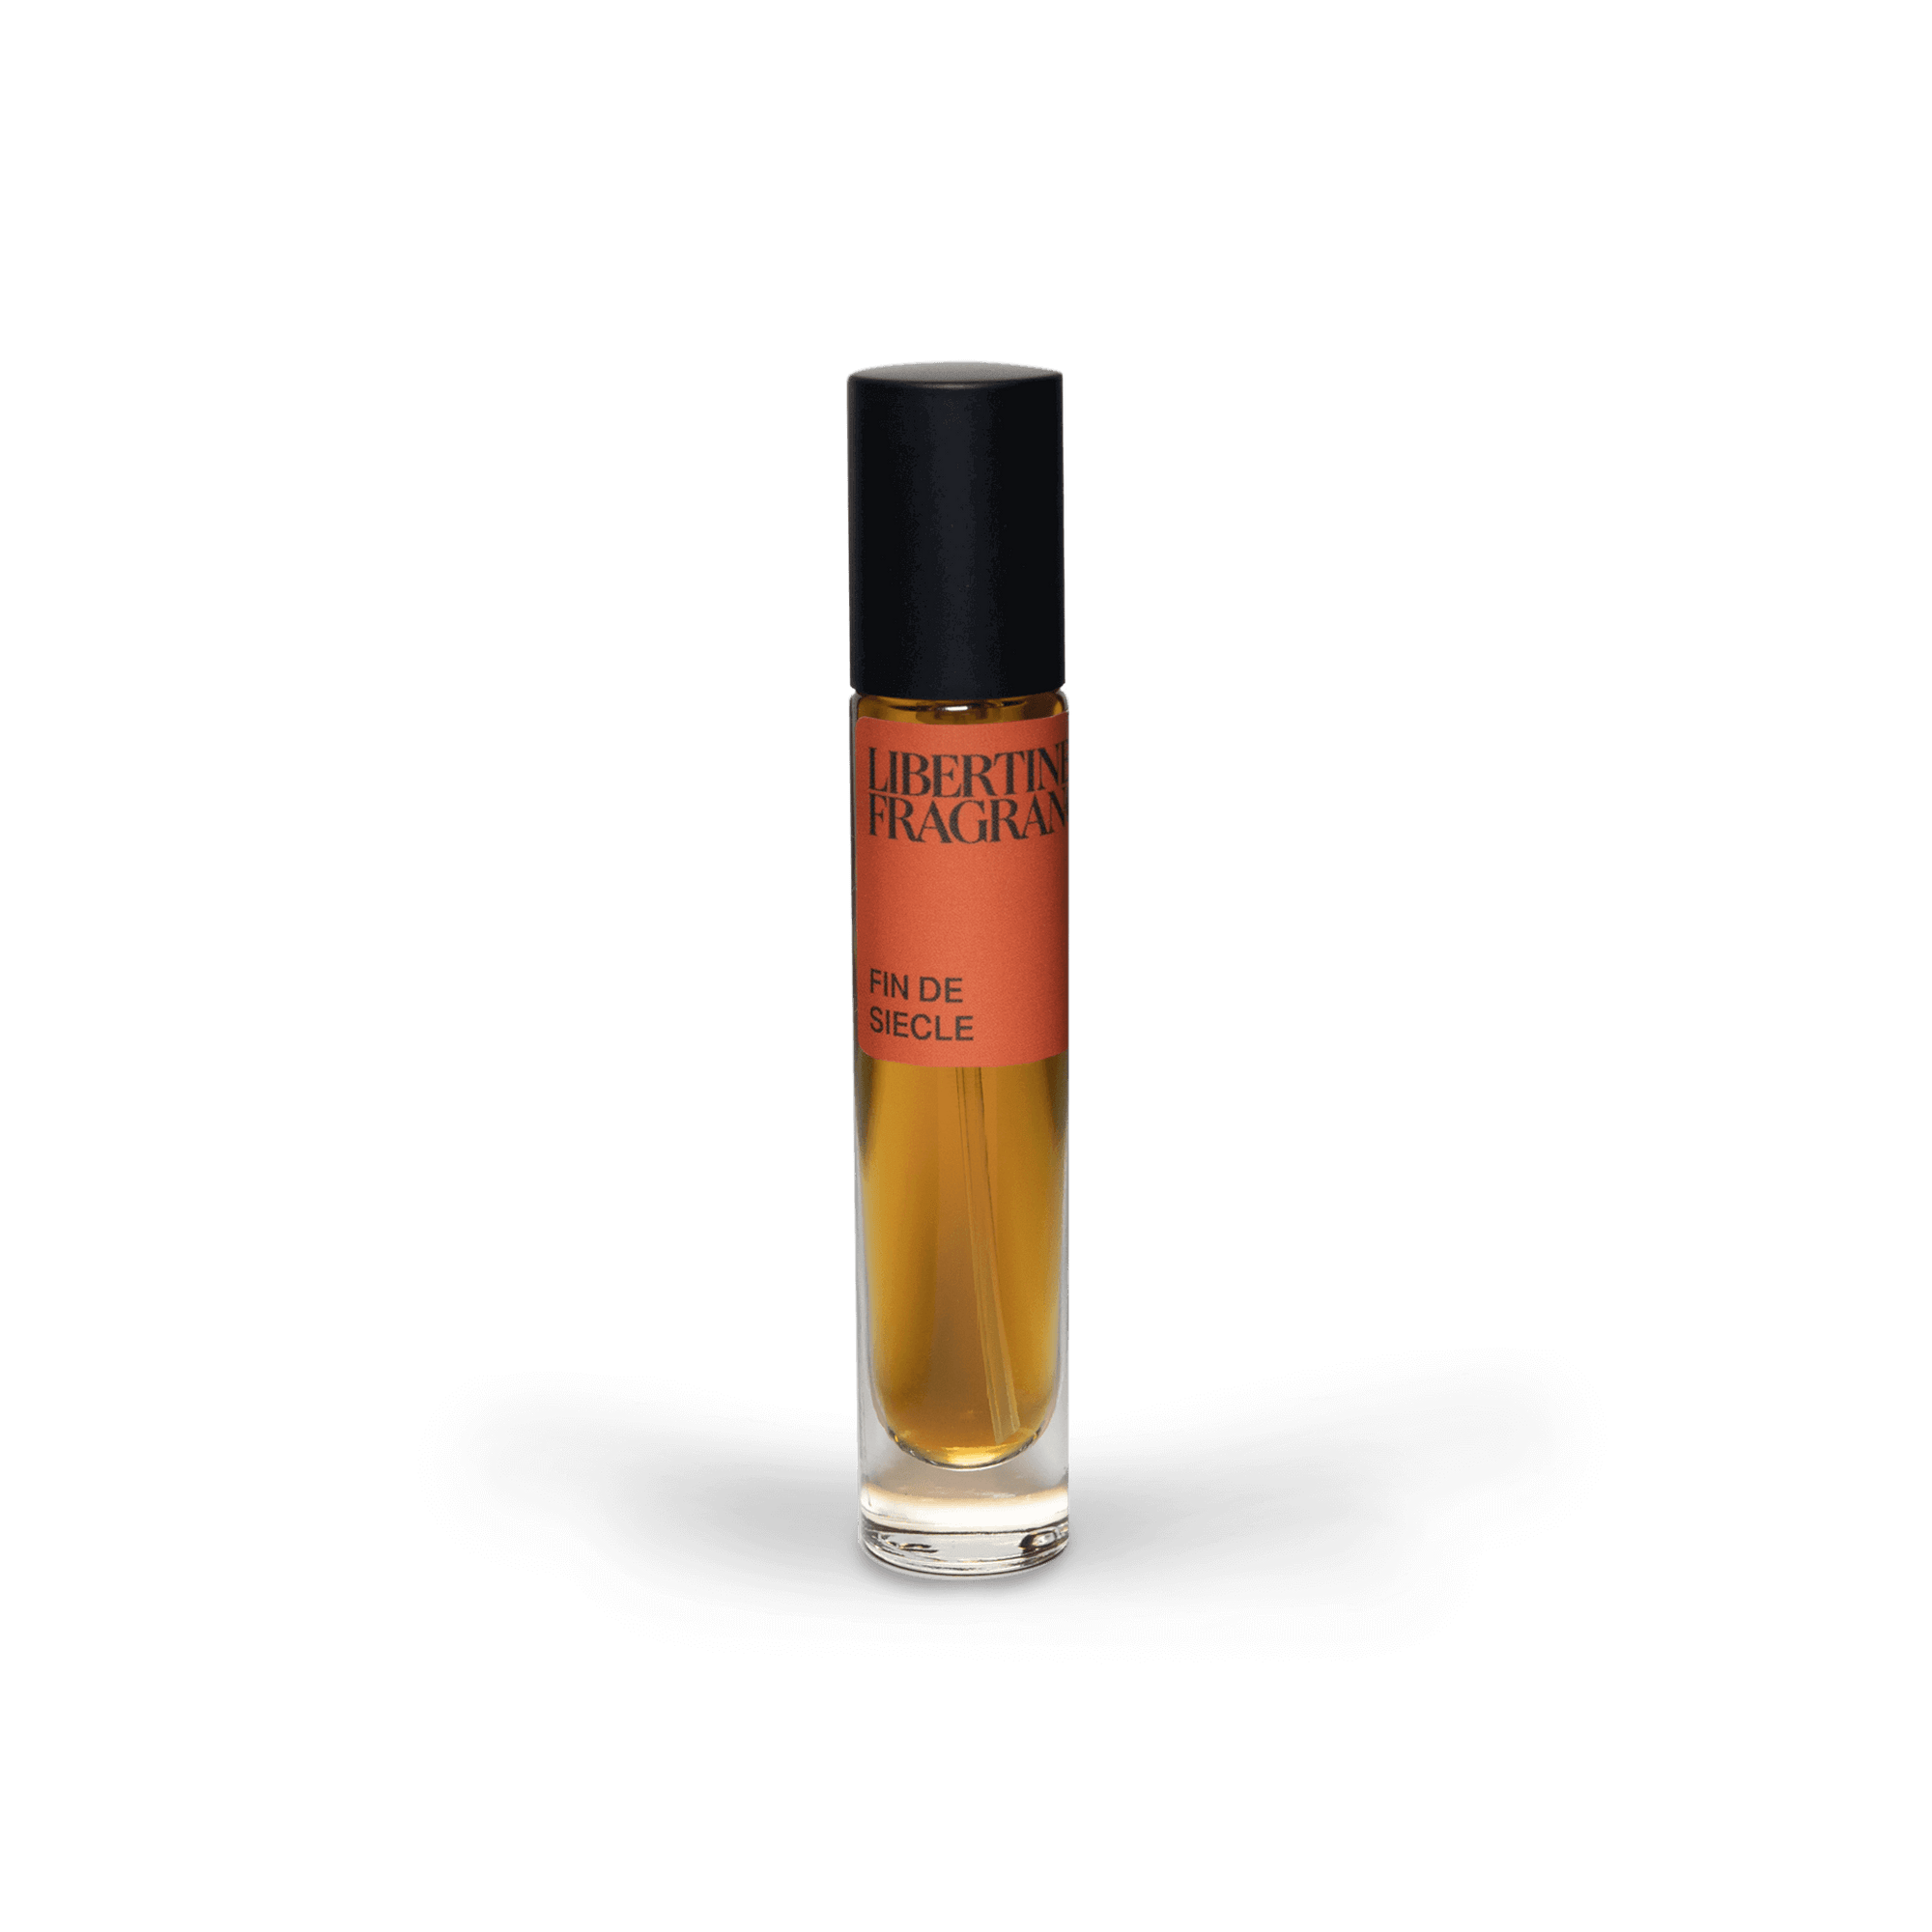 Dark rose perfume by libertine fragrance